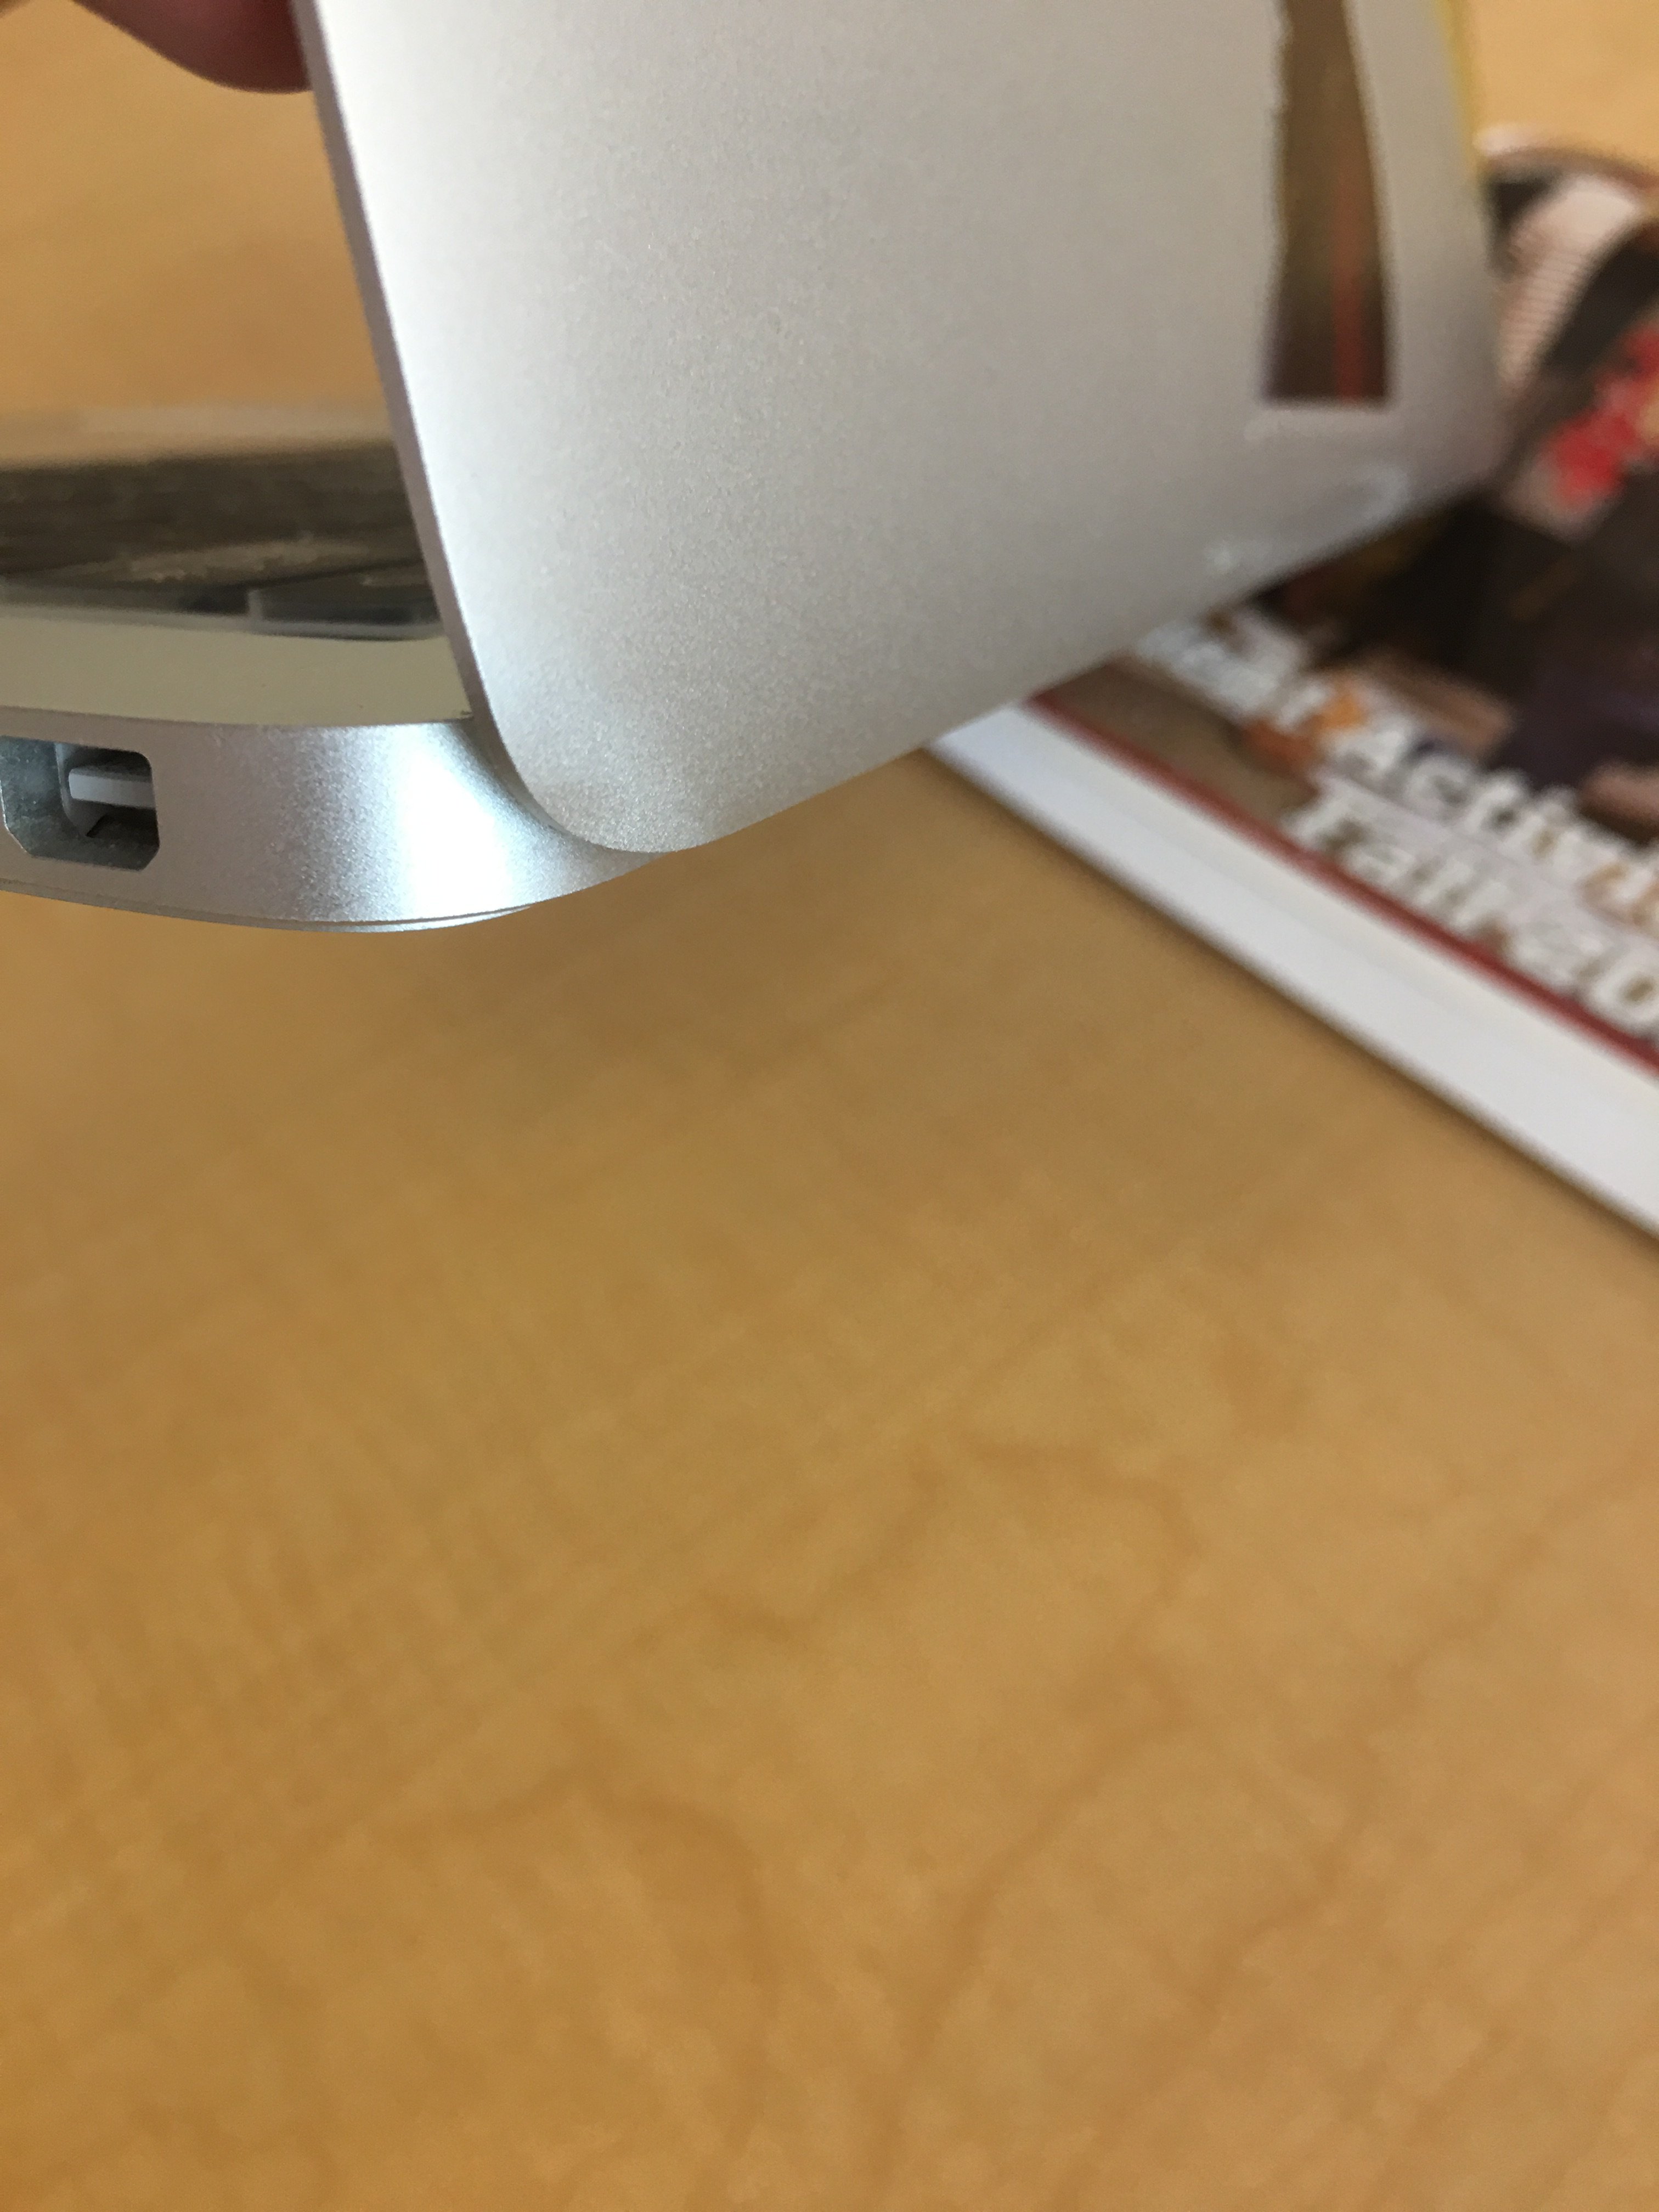 Bent corner on MacBook Air? | MacRumors Forums